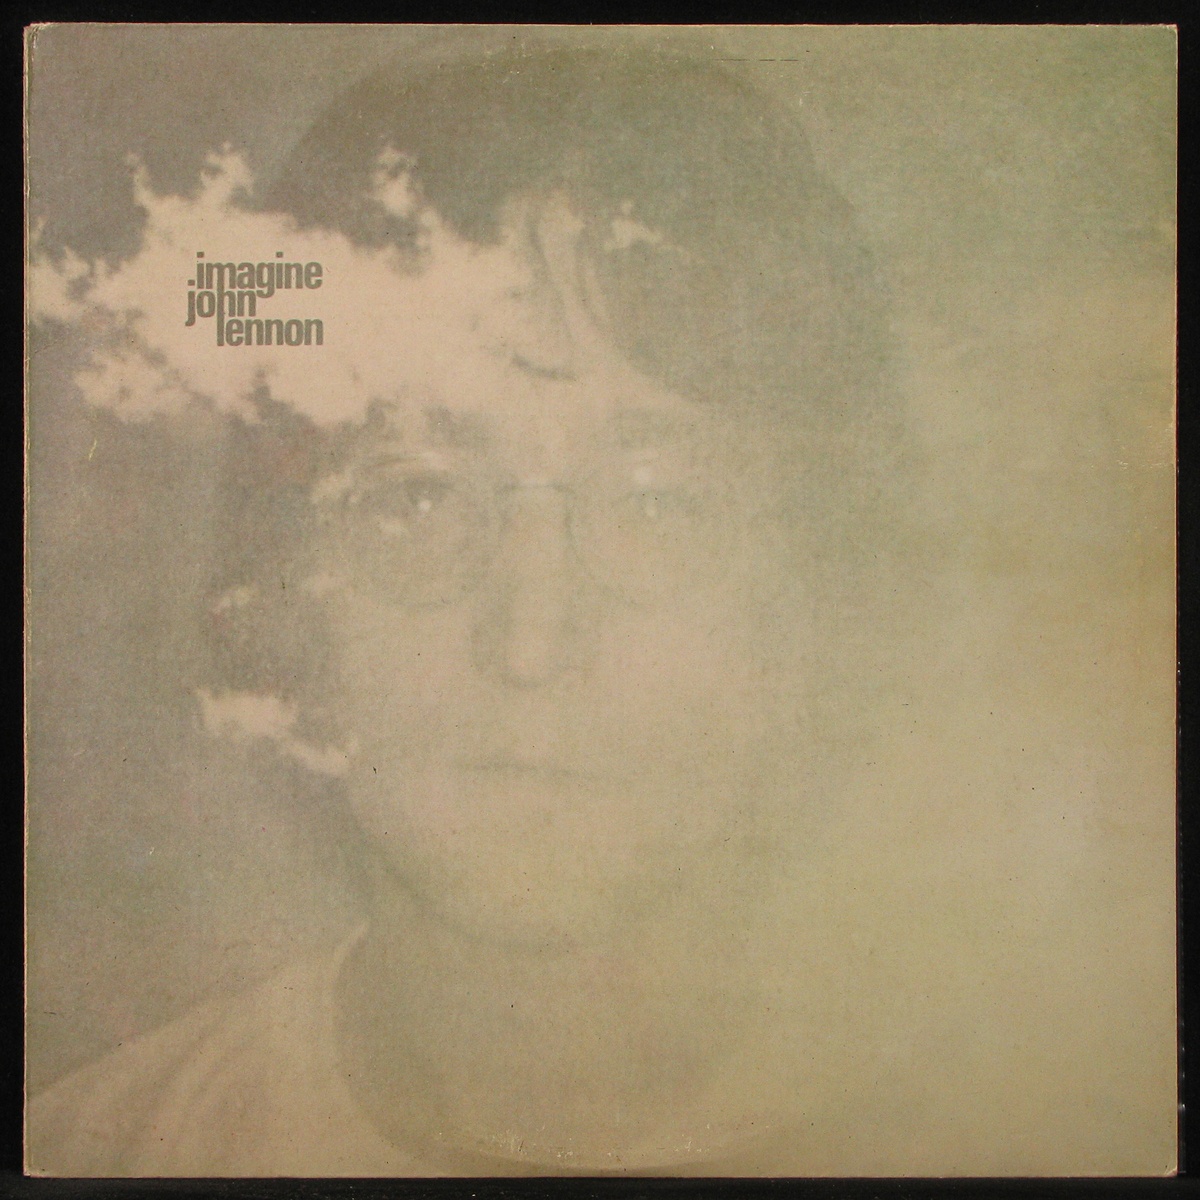 LP John Lennon — Imagine фото